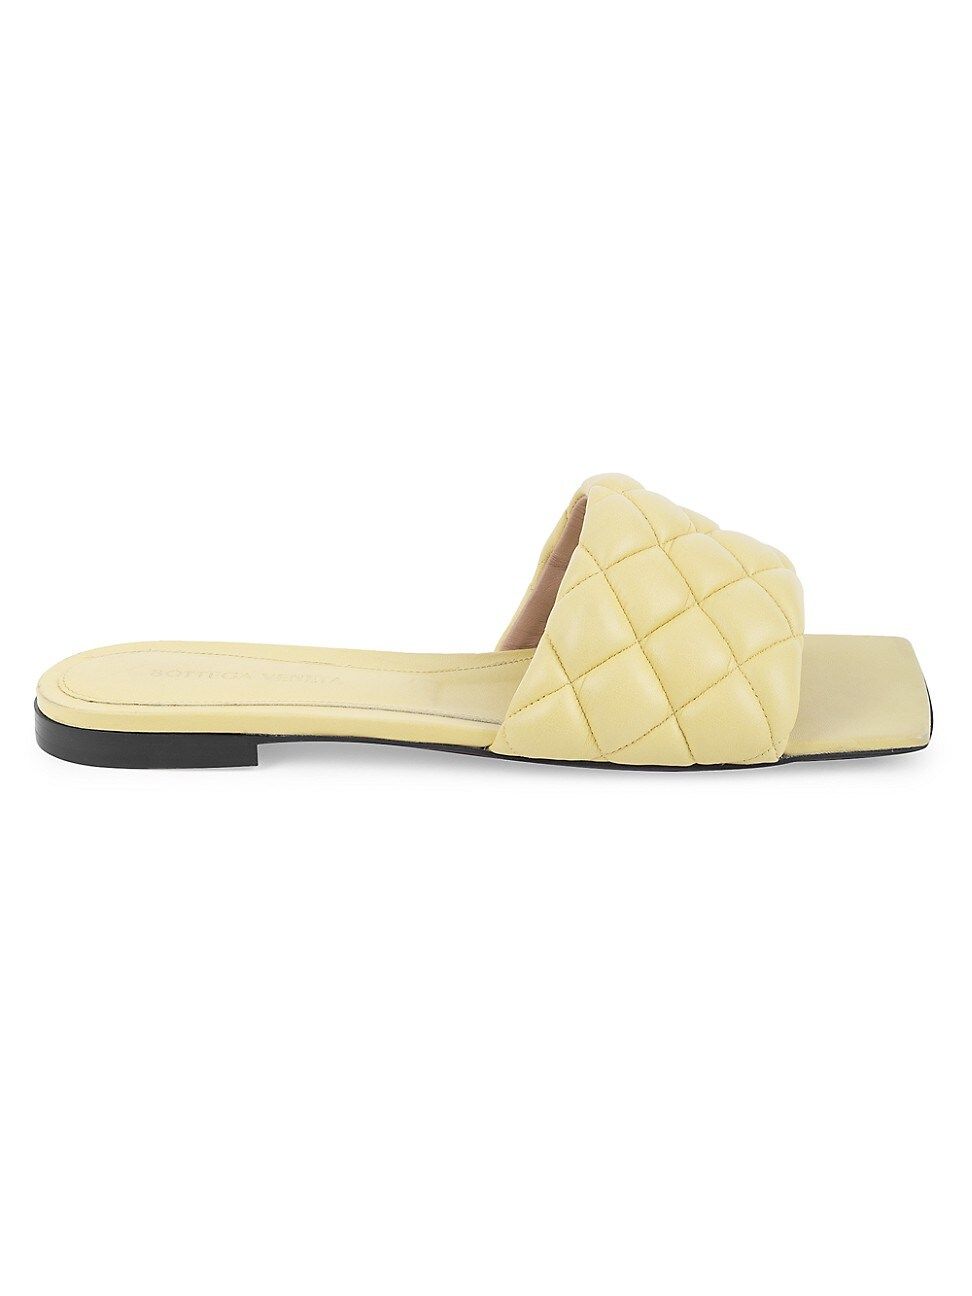 Bottega Veneta Women's Padded Leather Flat Sandals - Pear - Size 8.5 | Saks Fifth Avenue